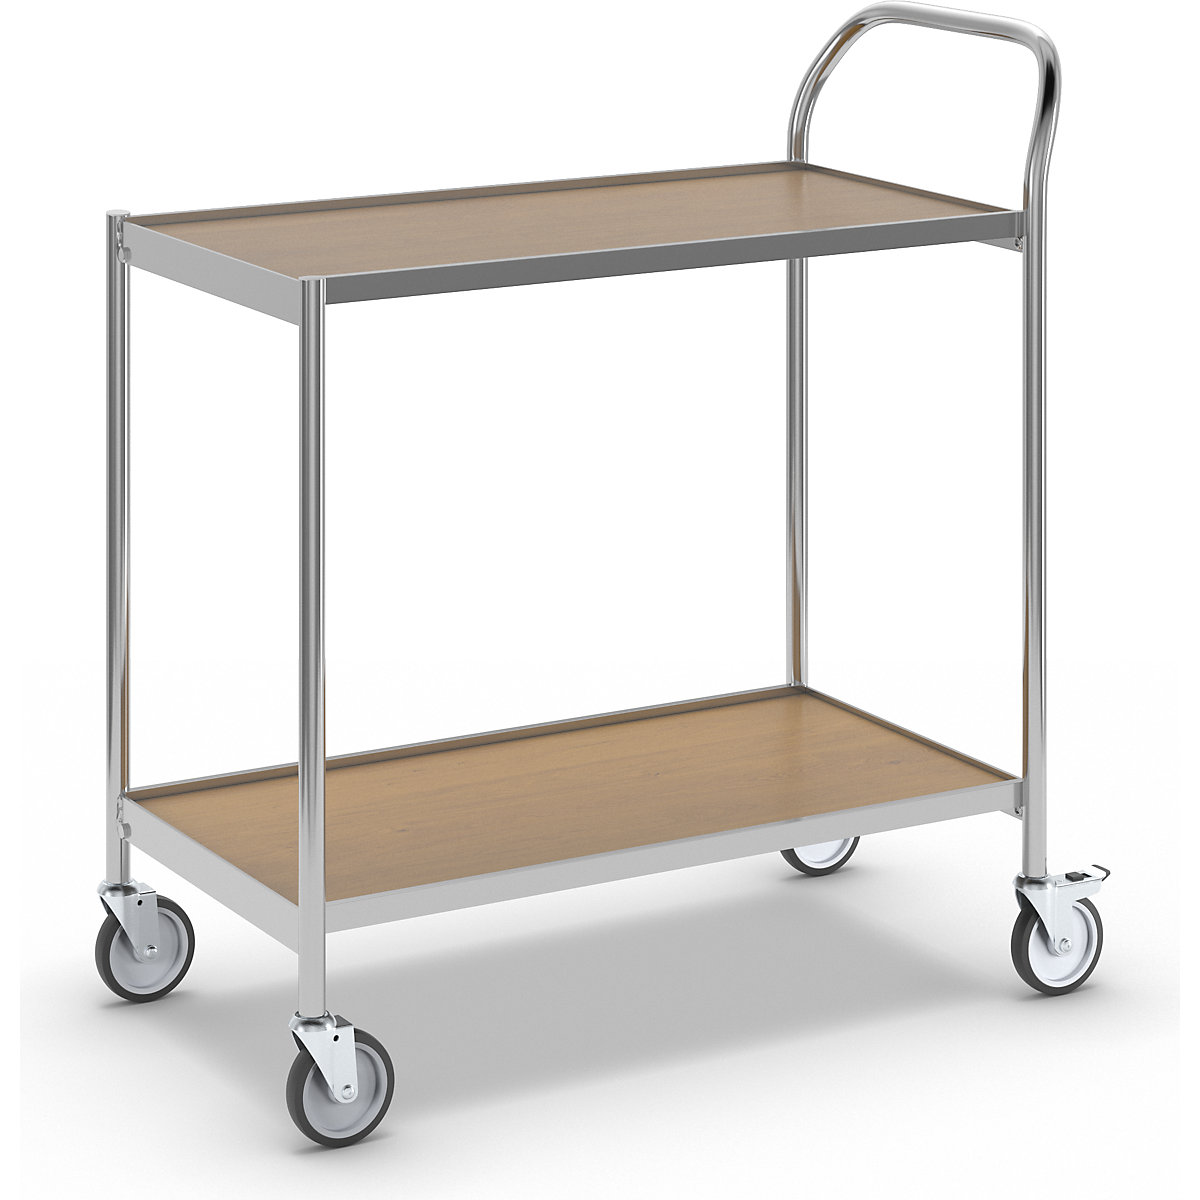 Stolový vozík – HelgeNyberg, 2 etáže, d x š 800 x 420 mm, chrom / dub-6